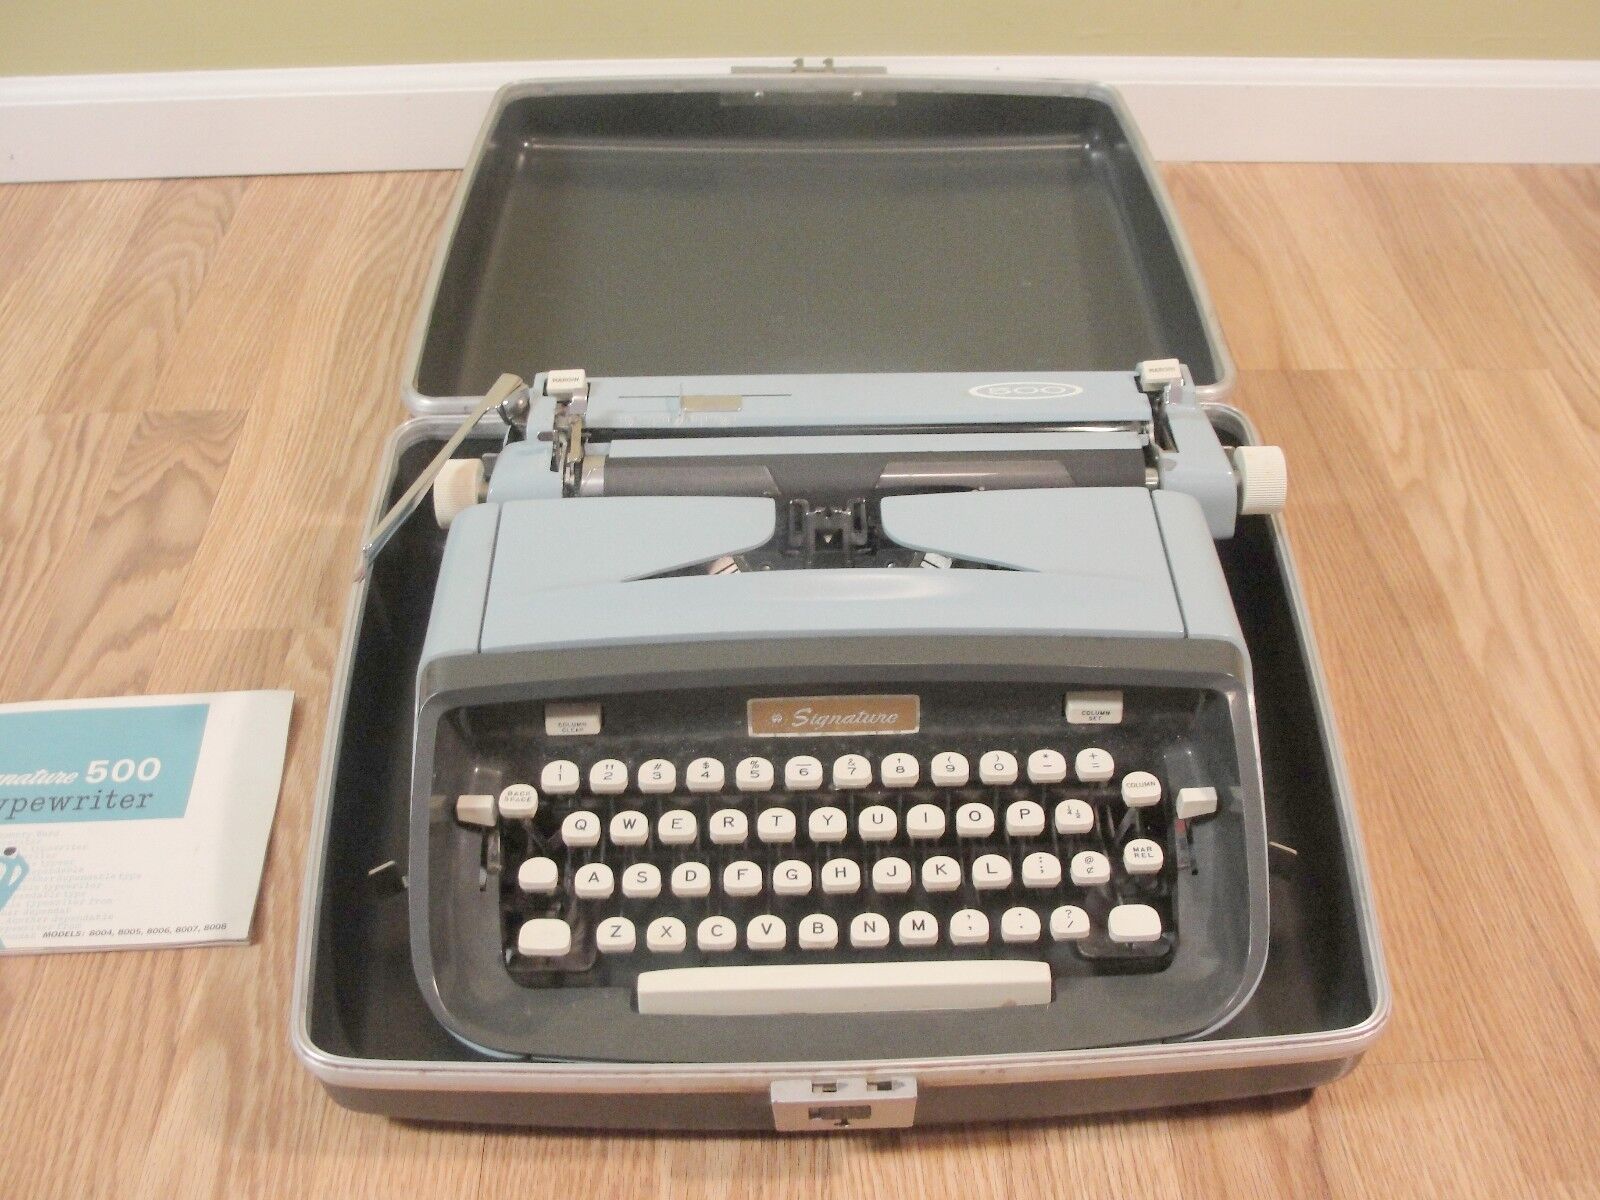 VTG Signature 500 Manual Portable Typewriter MONTGOMERY WARD Model 8004